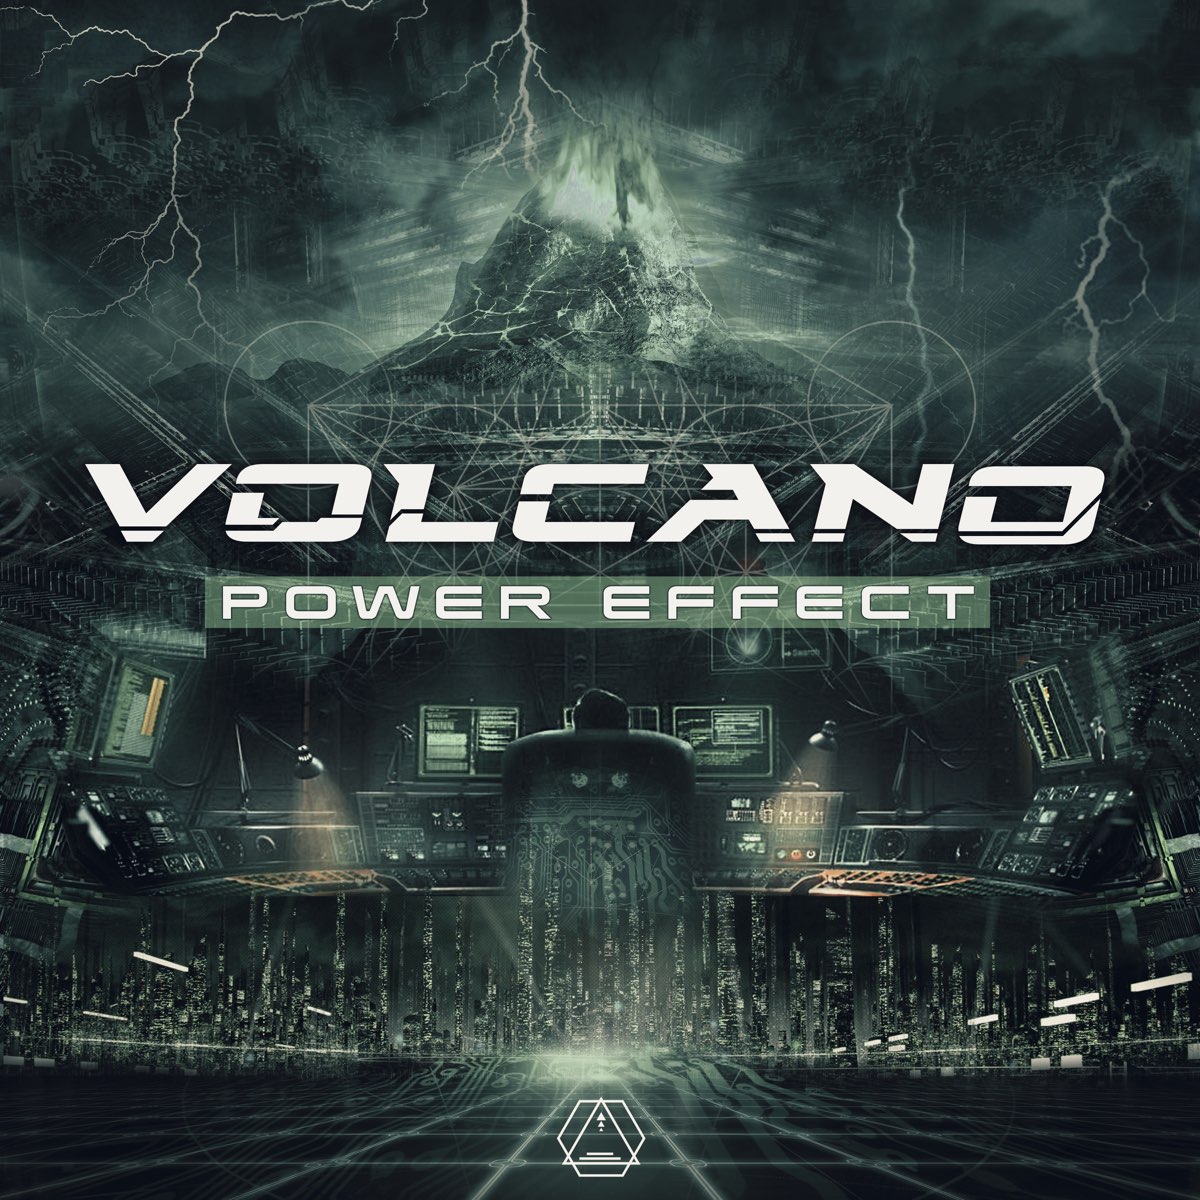 Power Effect. Volcan Power. Power released